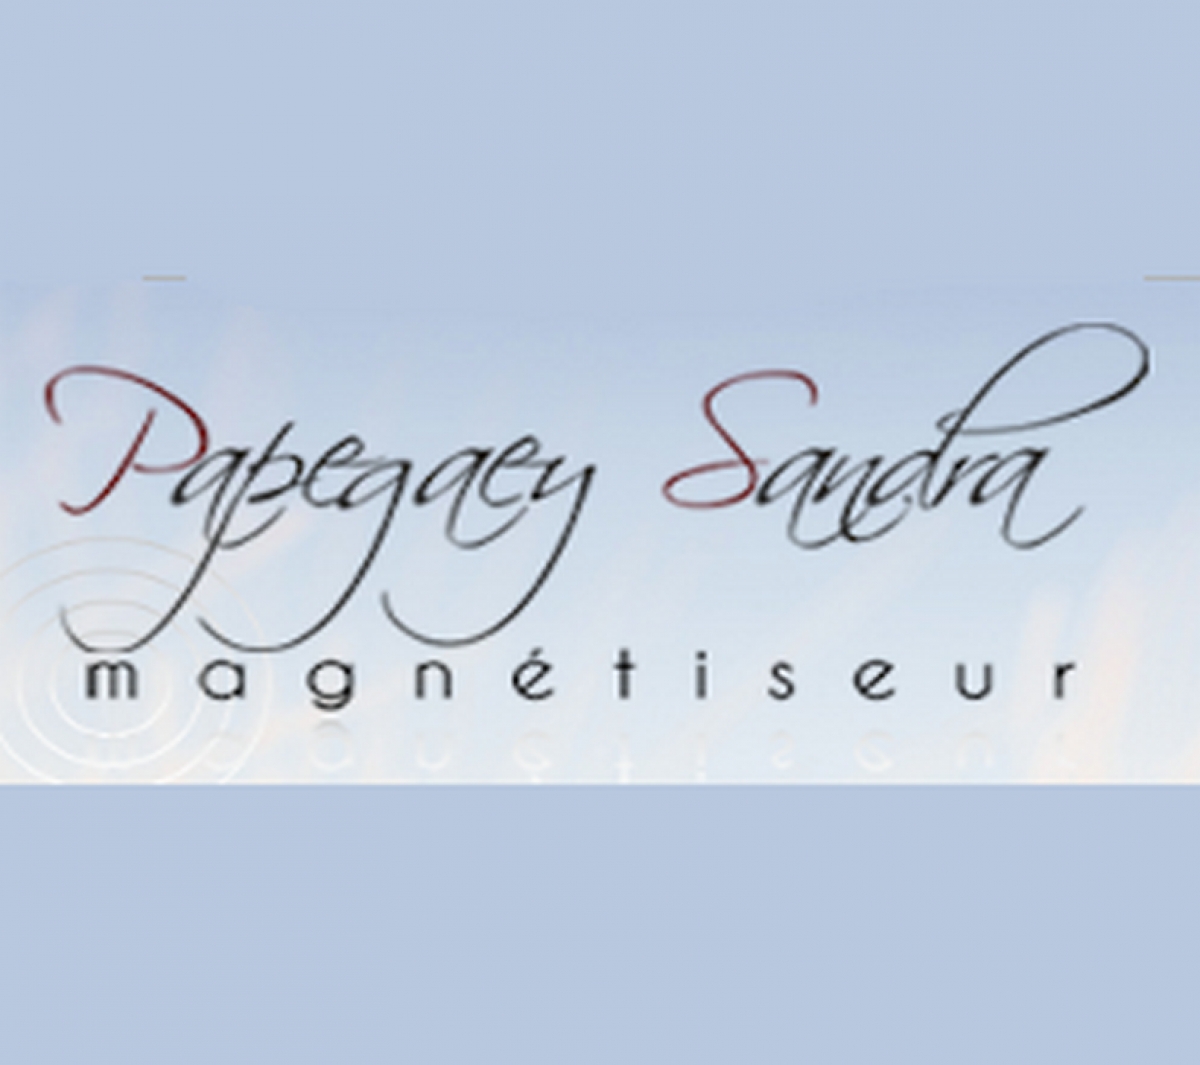 PAPEGAEY SANDRA - MAGN�TISEUR